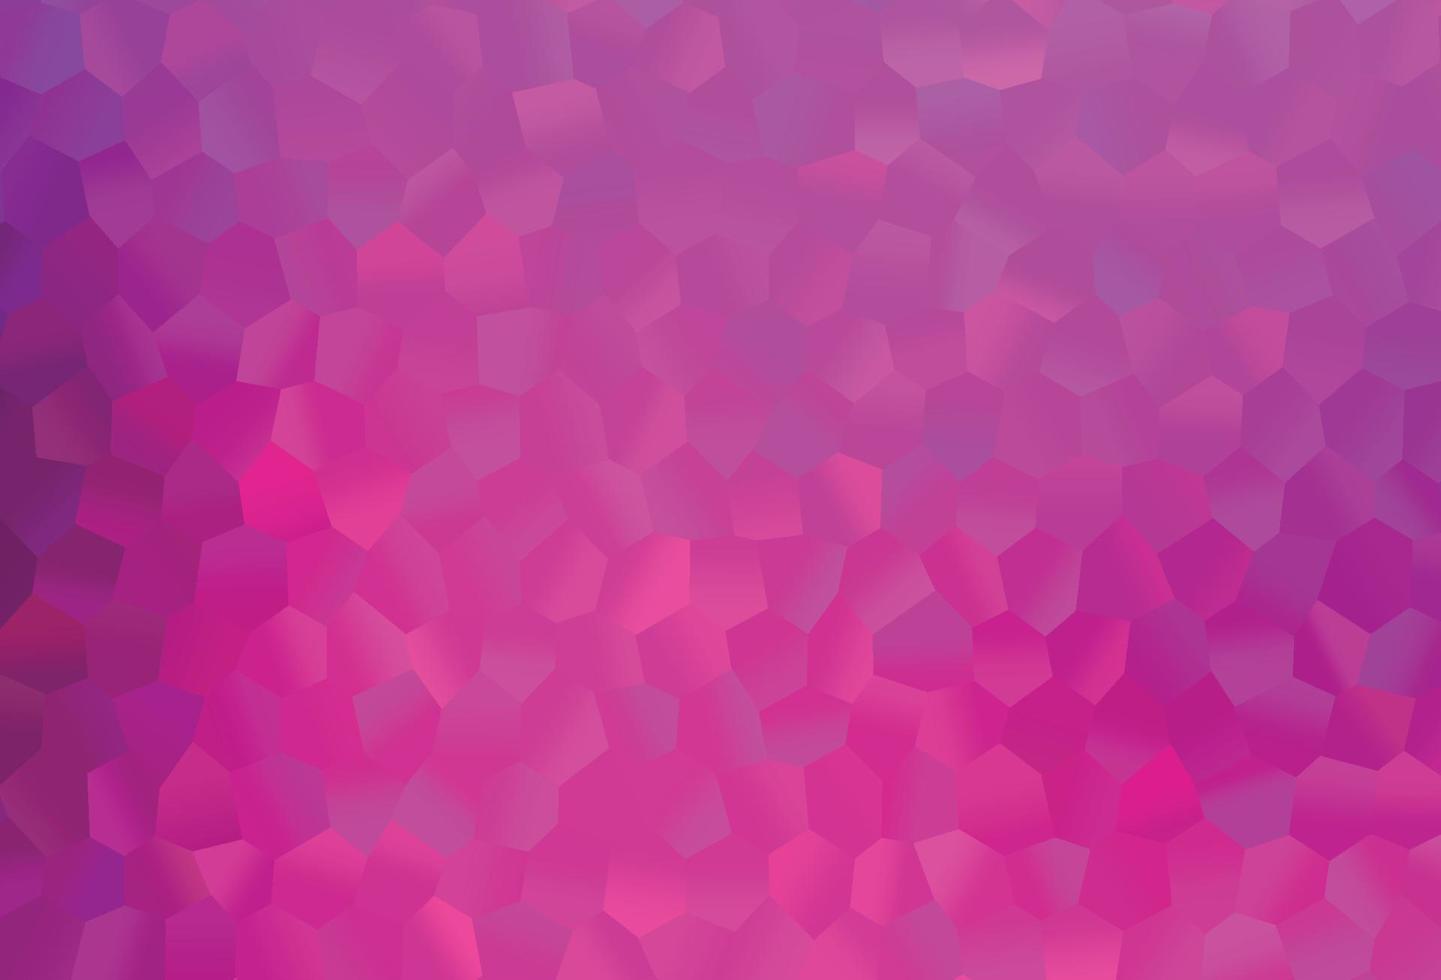 plantilla de vector rosa claro en estilo hexagonal.